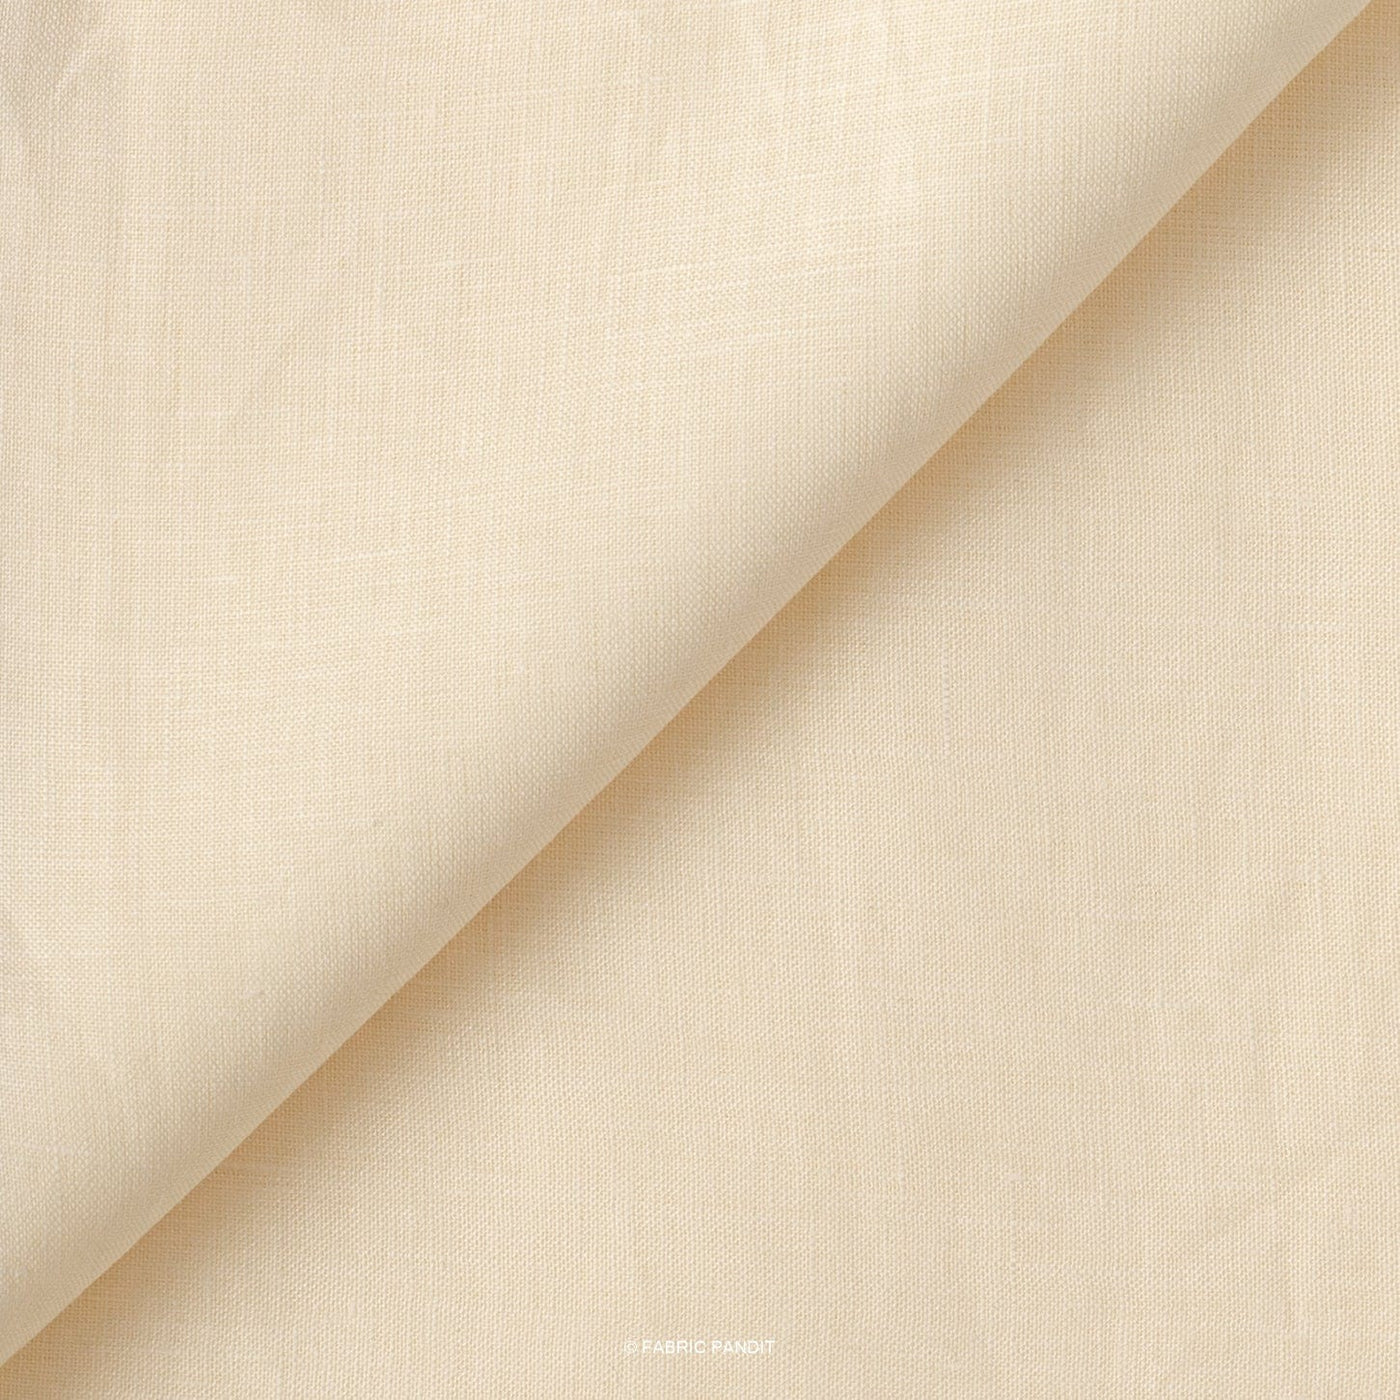 Buy Premium Unstitched Orginal 100% Pure European Linen Solid (60 Lea) Shirt  Fabri Cloth Piece For Men'S (1.60 Meter Length 58 Inch Width), White at